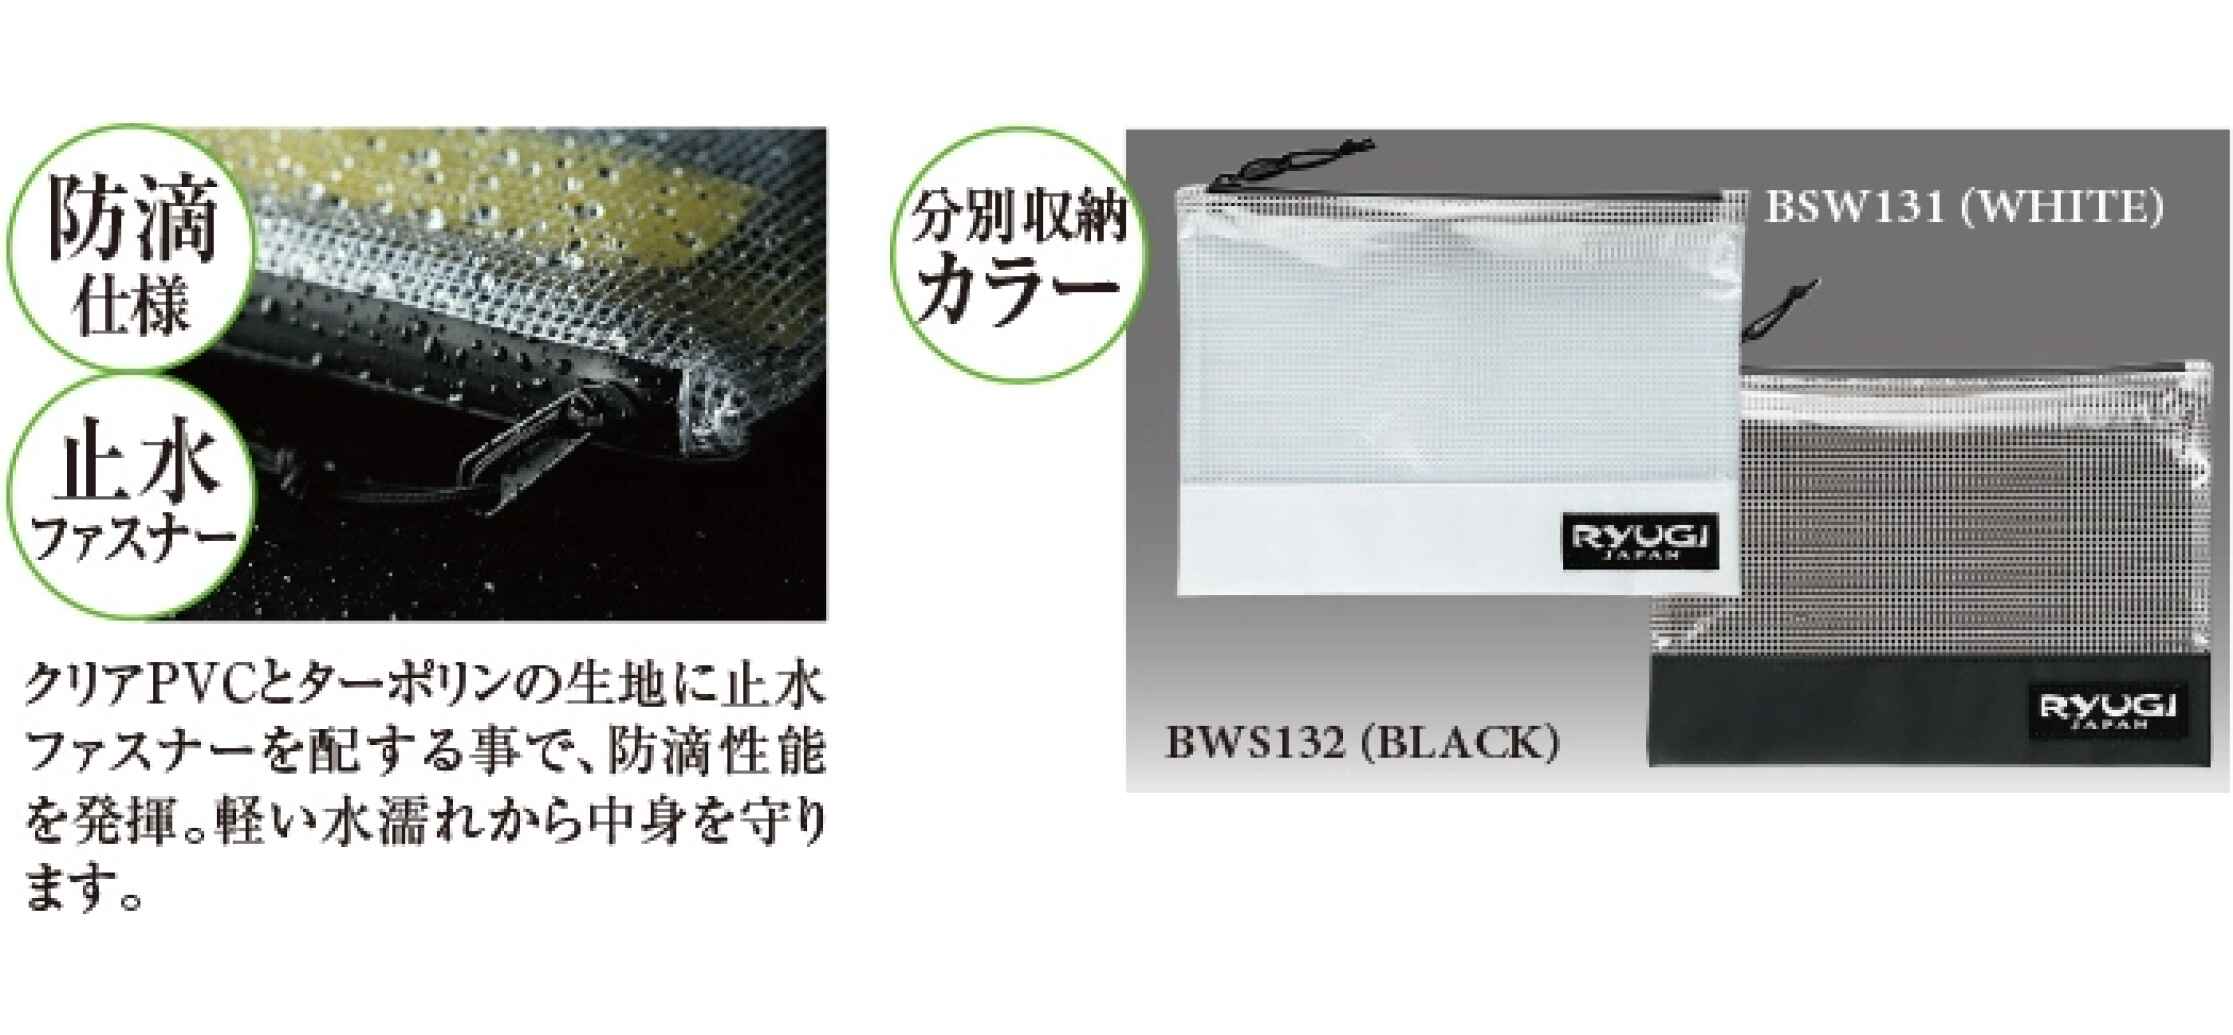 Ryugi Worm Stocker L White